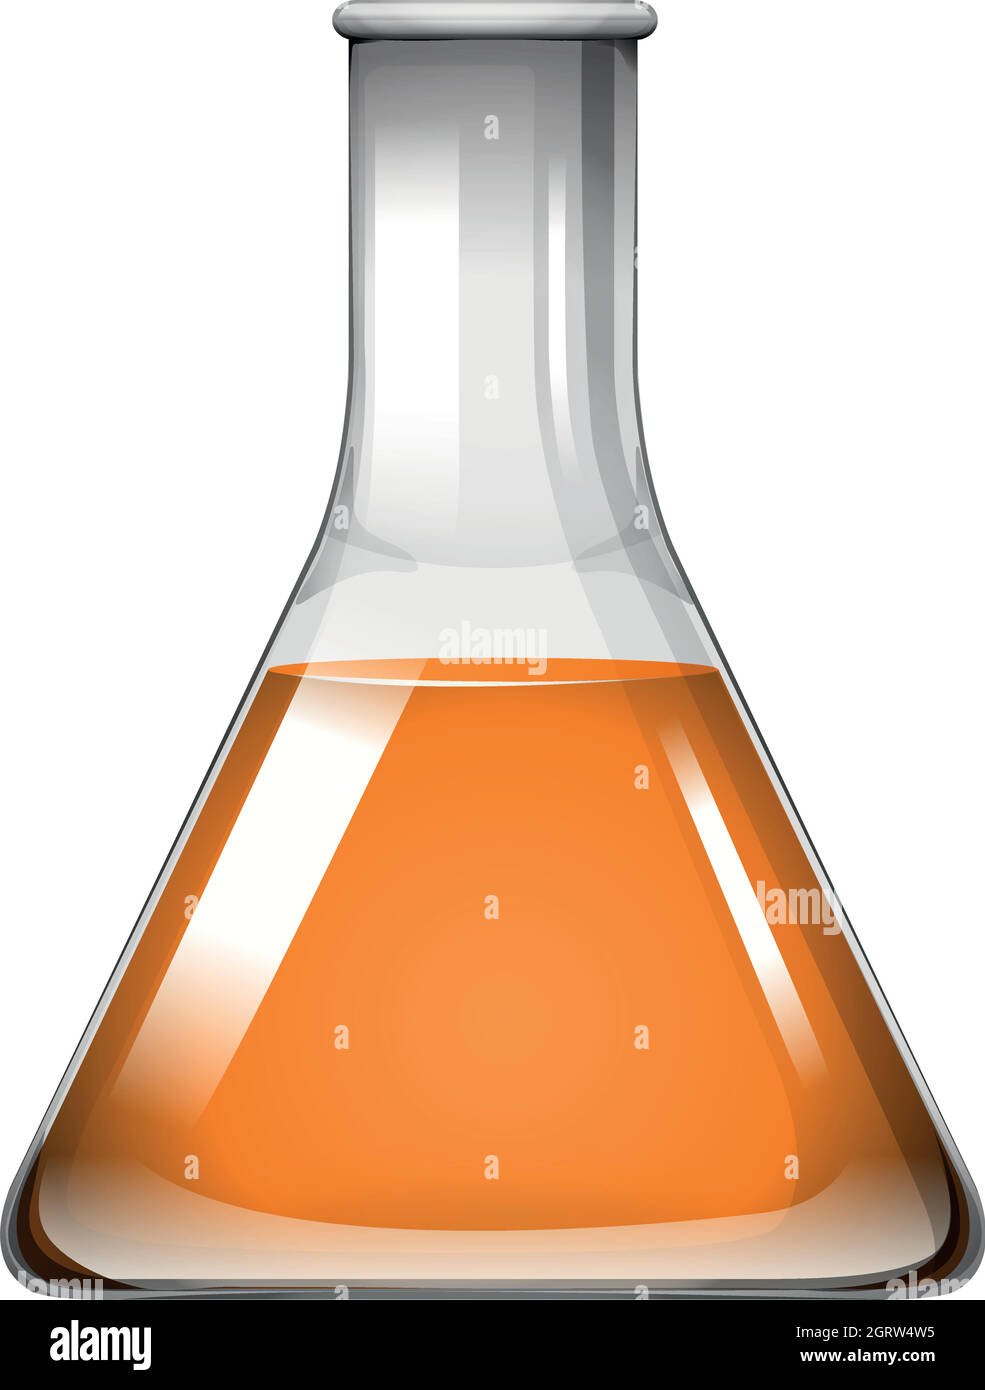 https://c8.alamy.com/comp/2GRW4W5/orange-liquid-in-glass-beaker-2GRW4W5.jpg